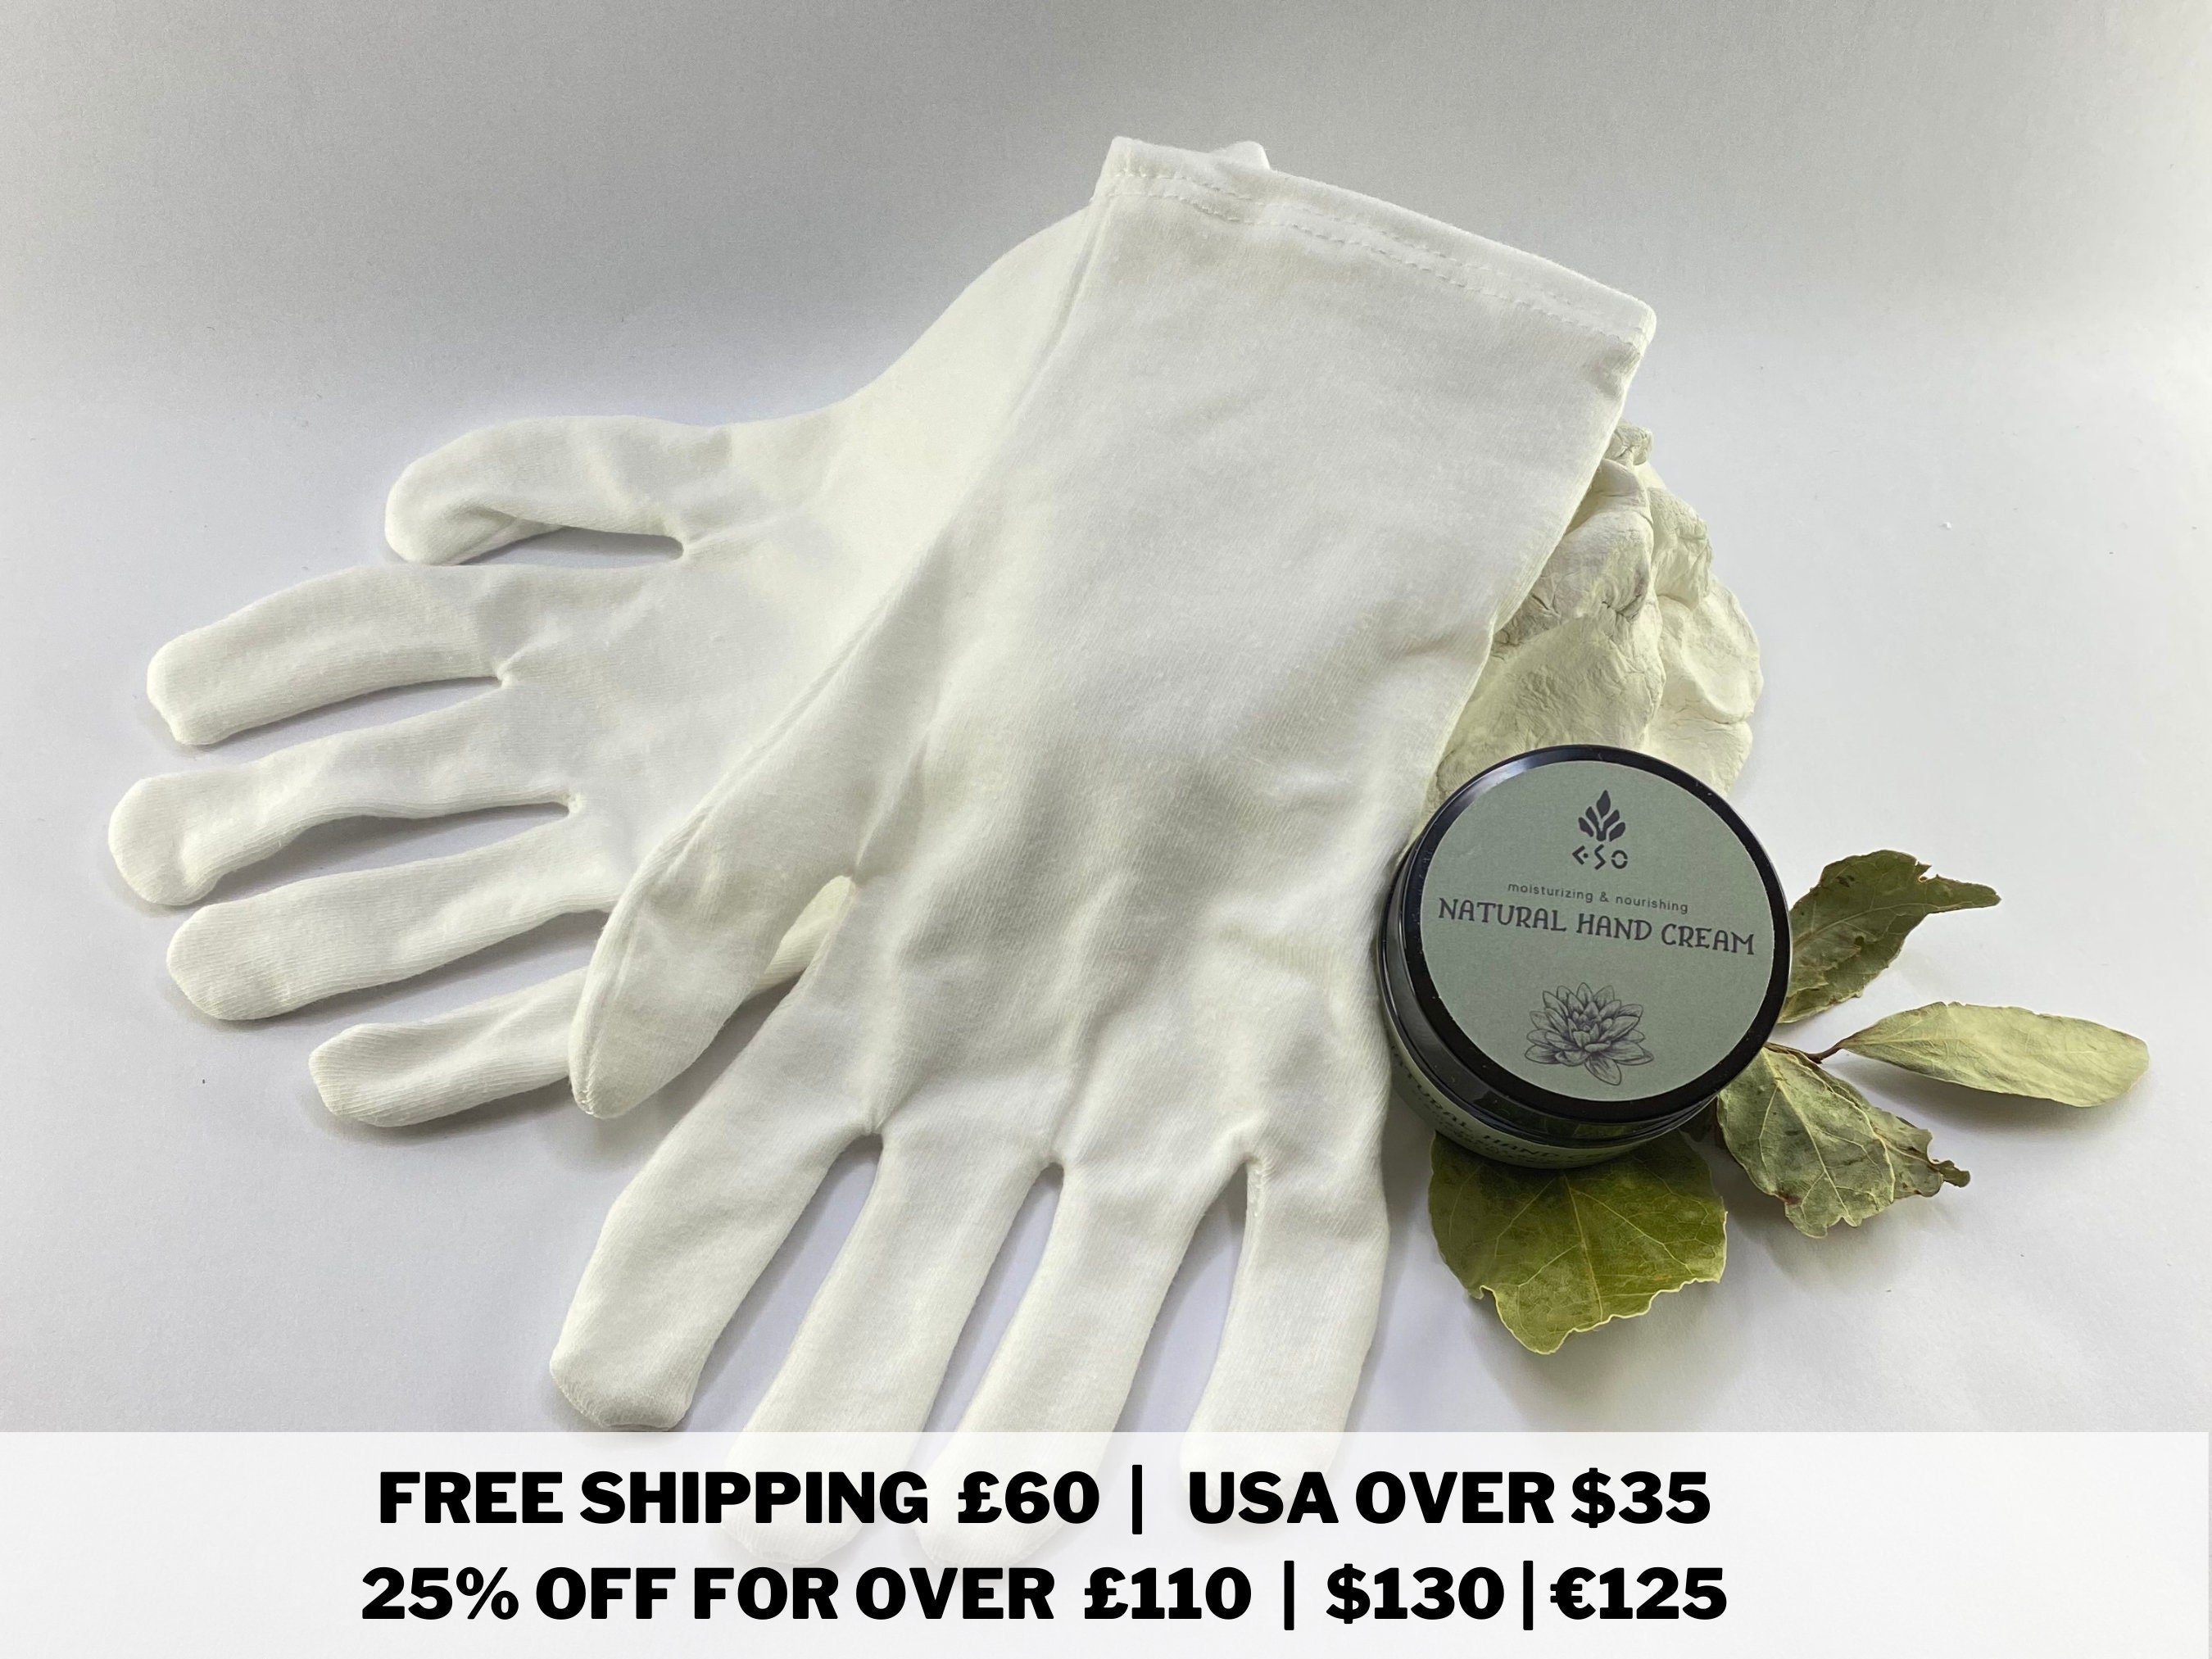 4 guantes blancos + 1 guante negro para eczema, piel sensible seca